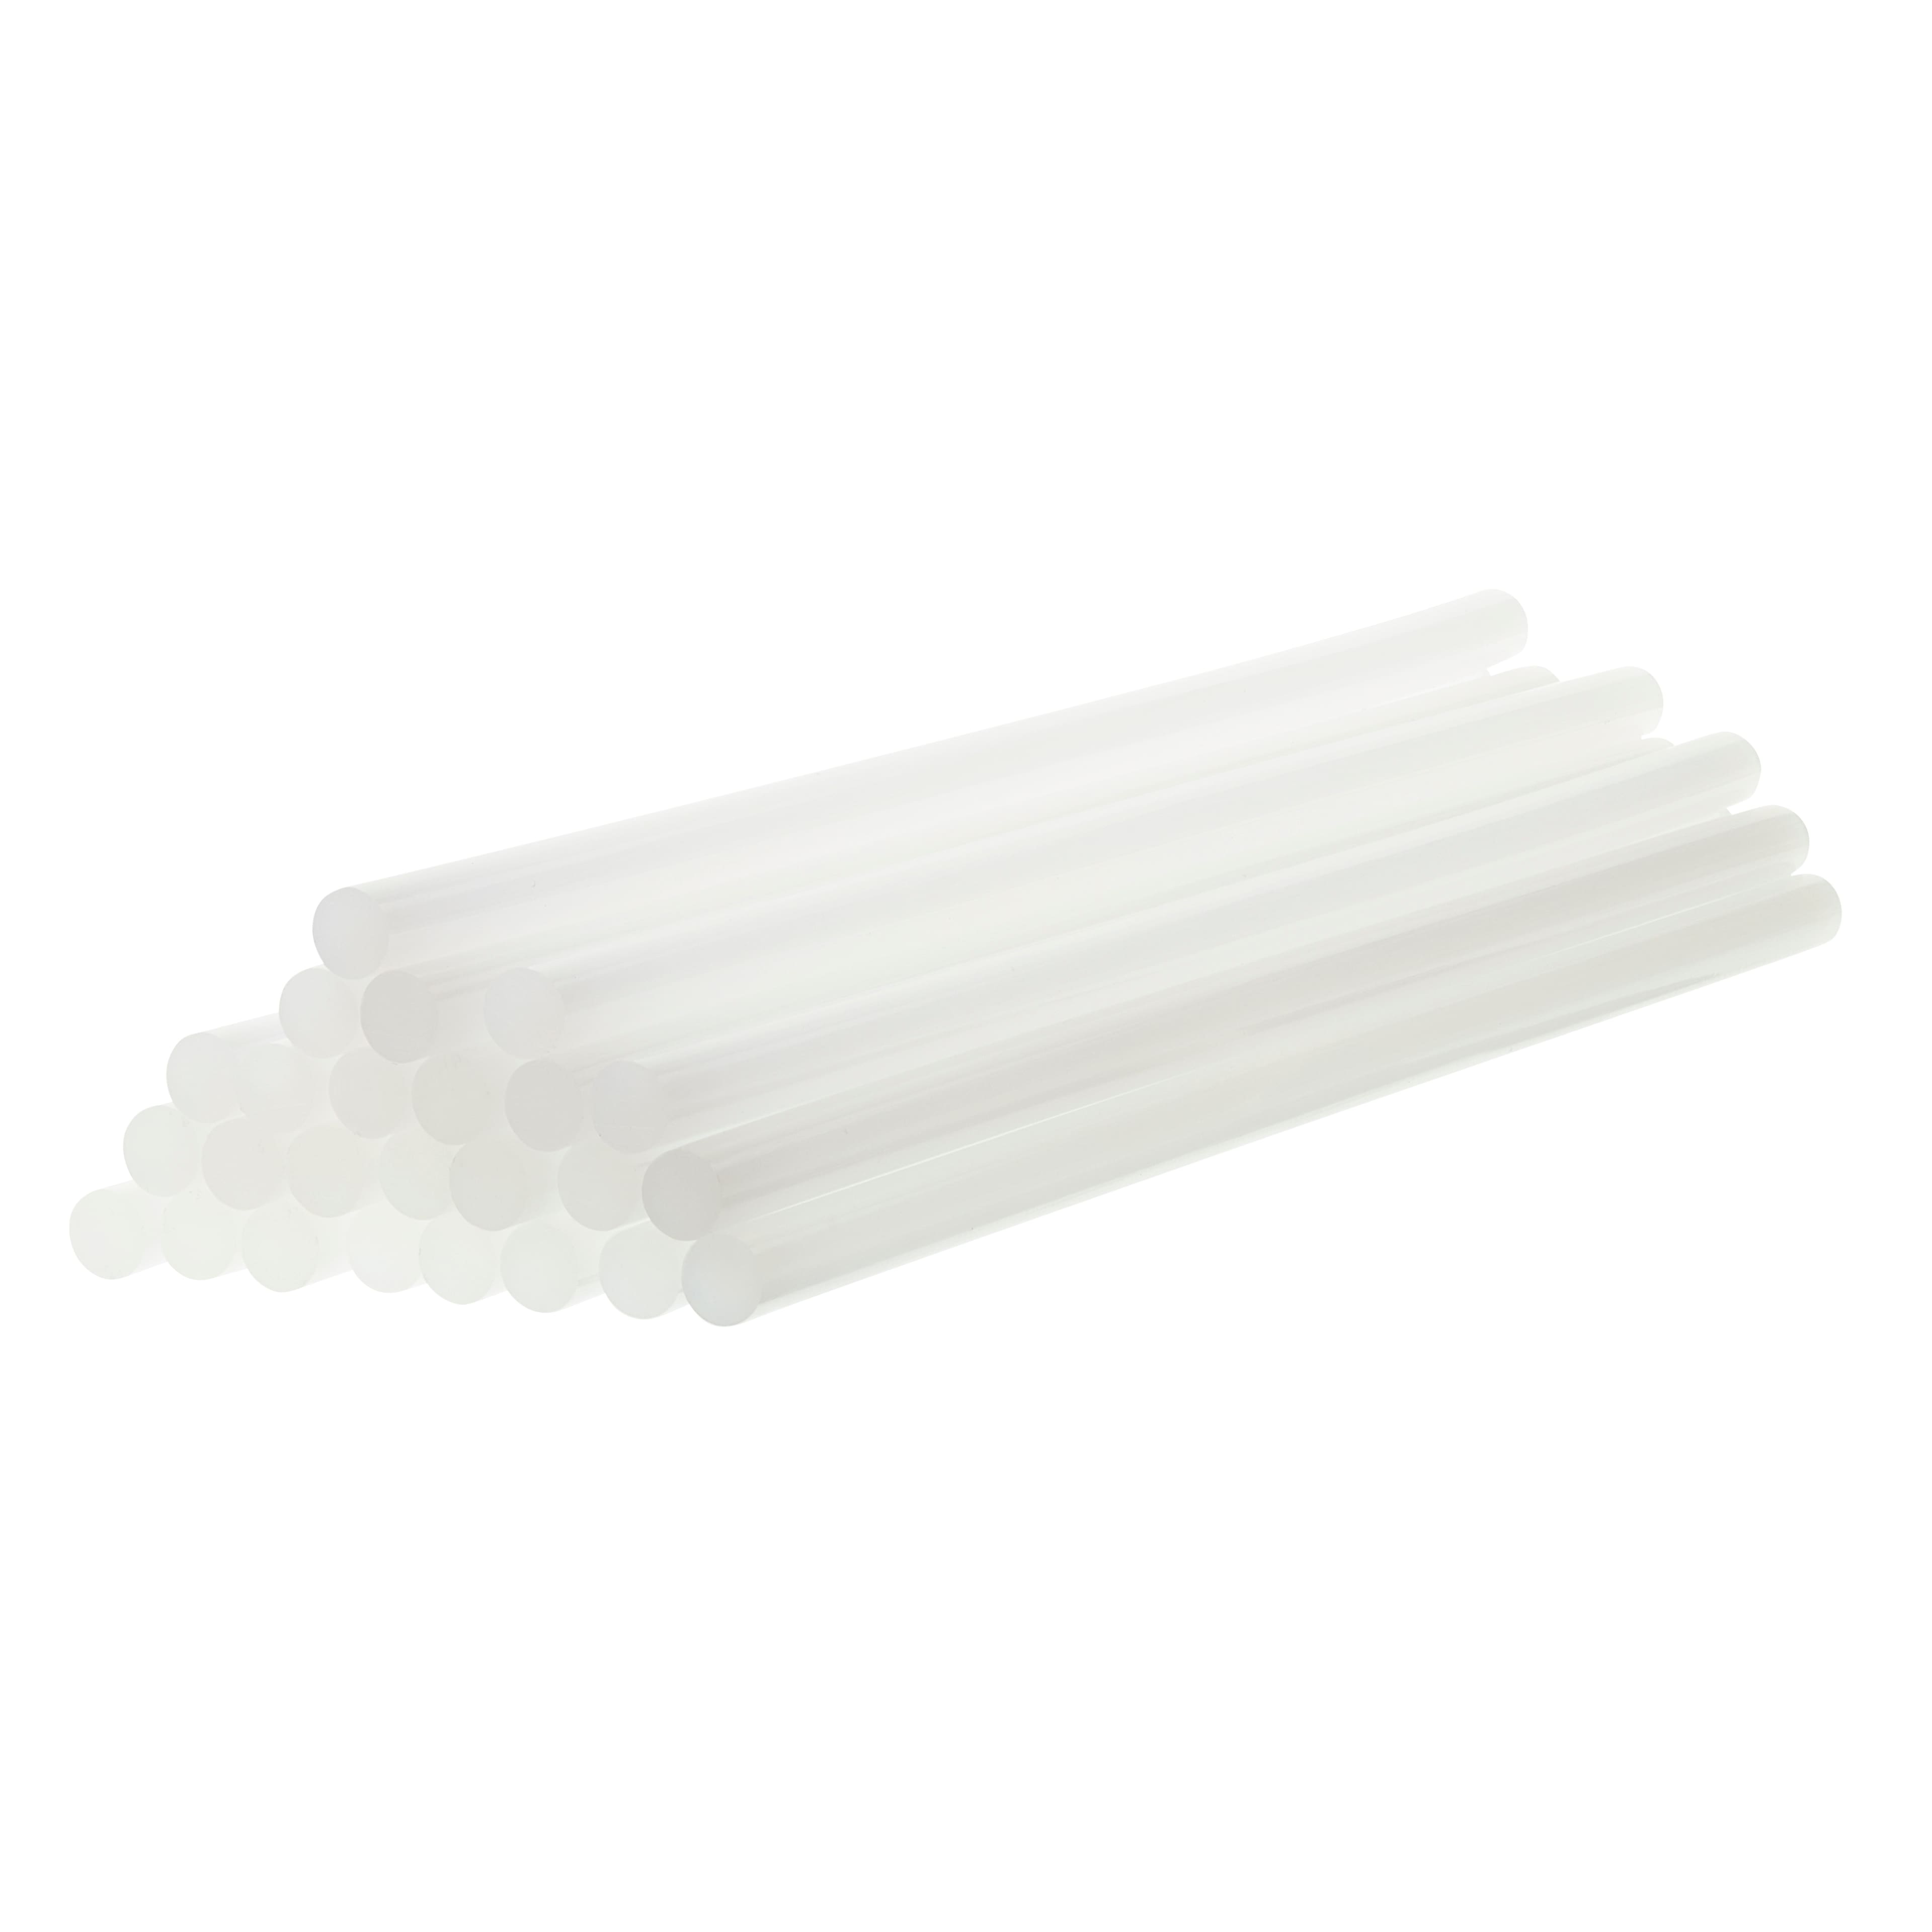 MONVICT Hot Glue Sticks, Pack of 50 (1.54 lb) 6Long 0.43